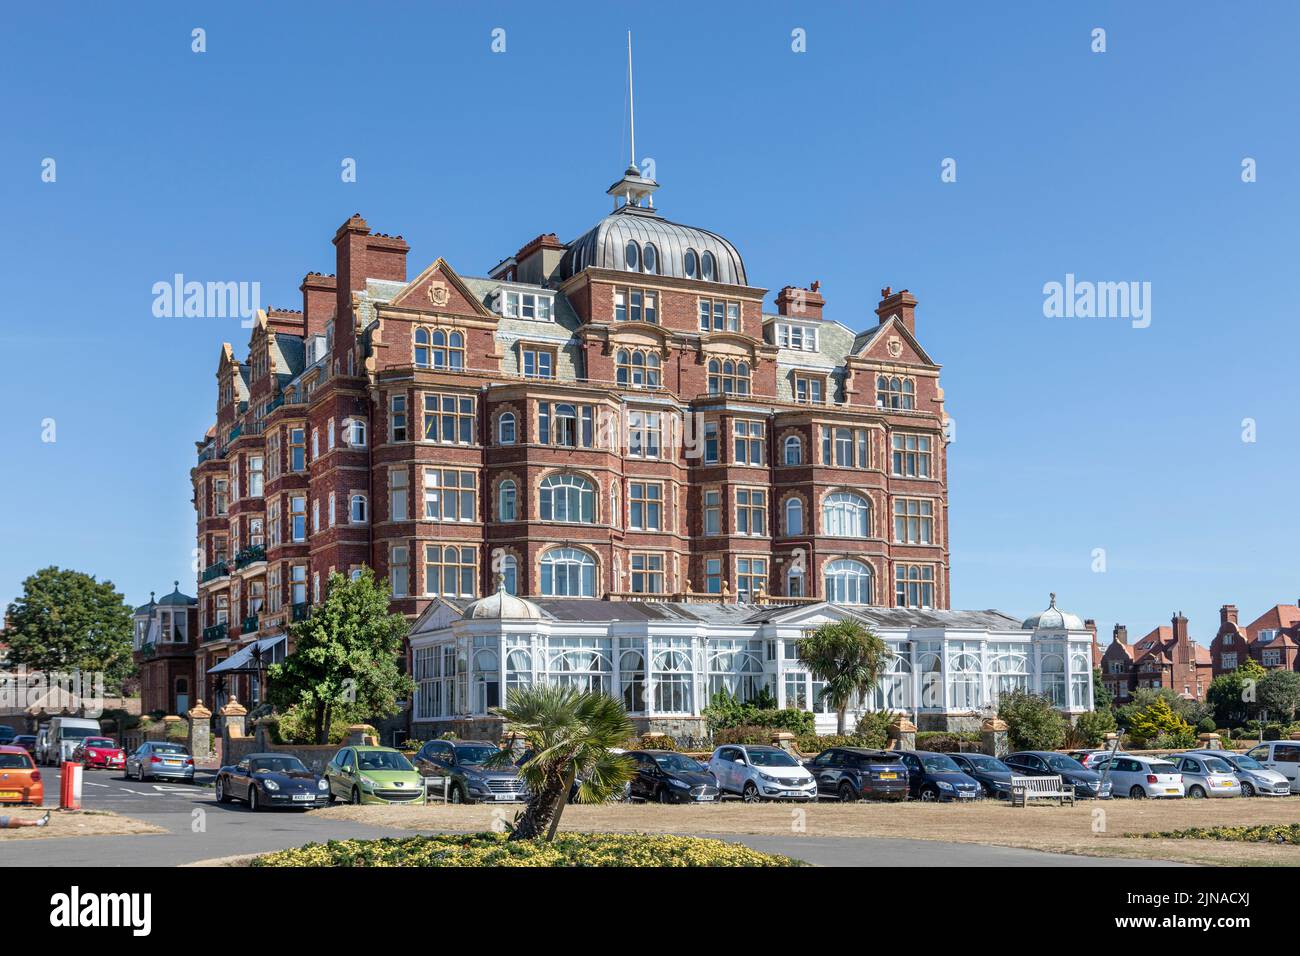 The Grand Hotel on The Leas, Folkestone, Kent. Stock Photo